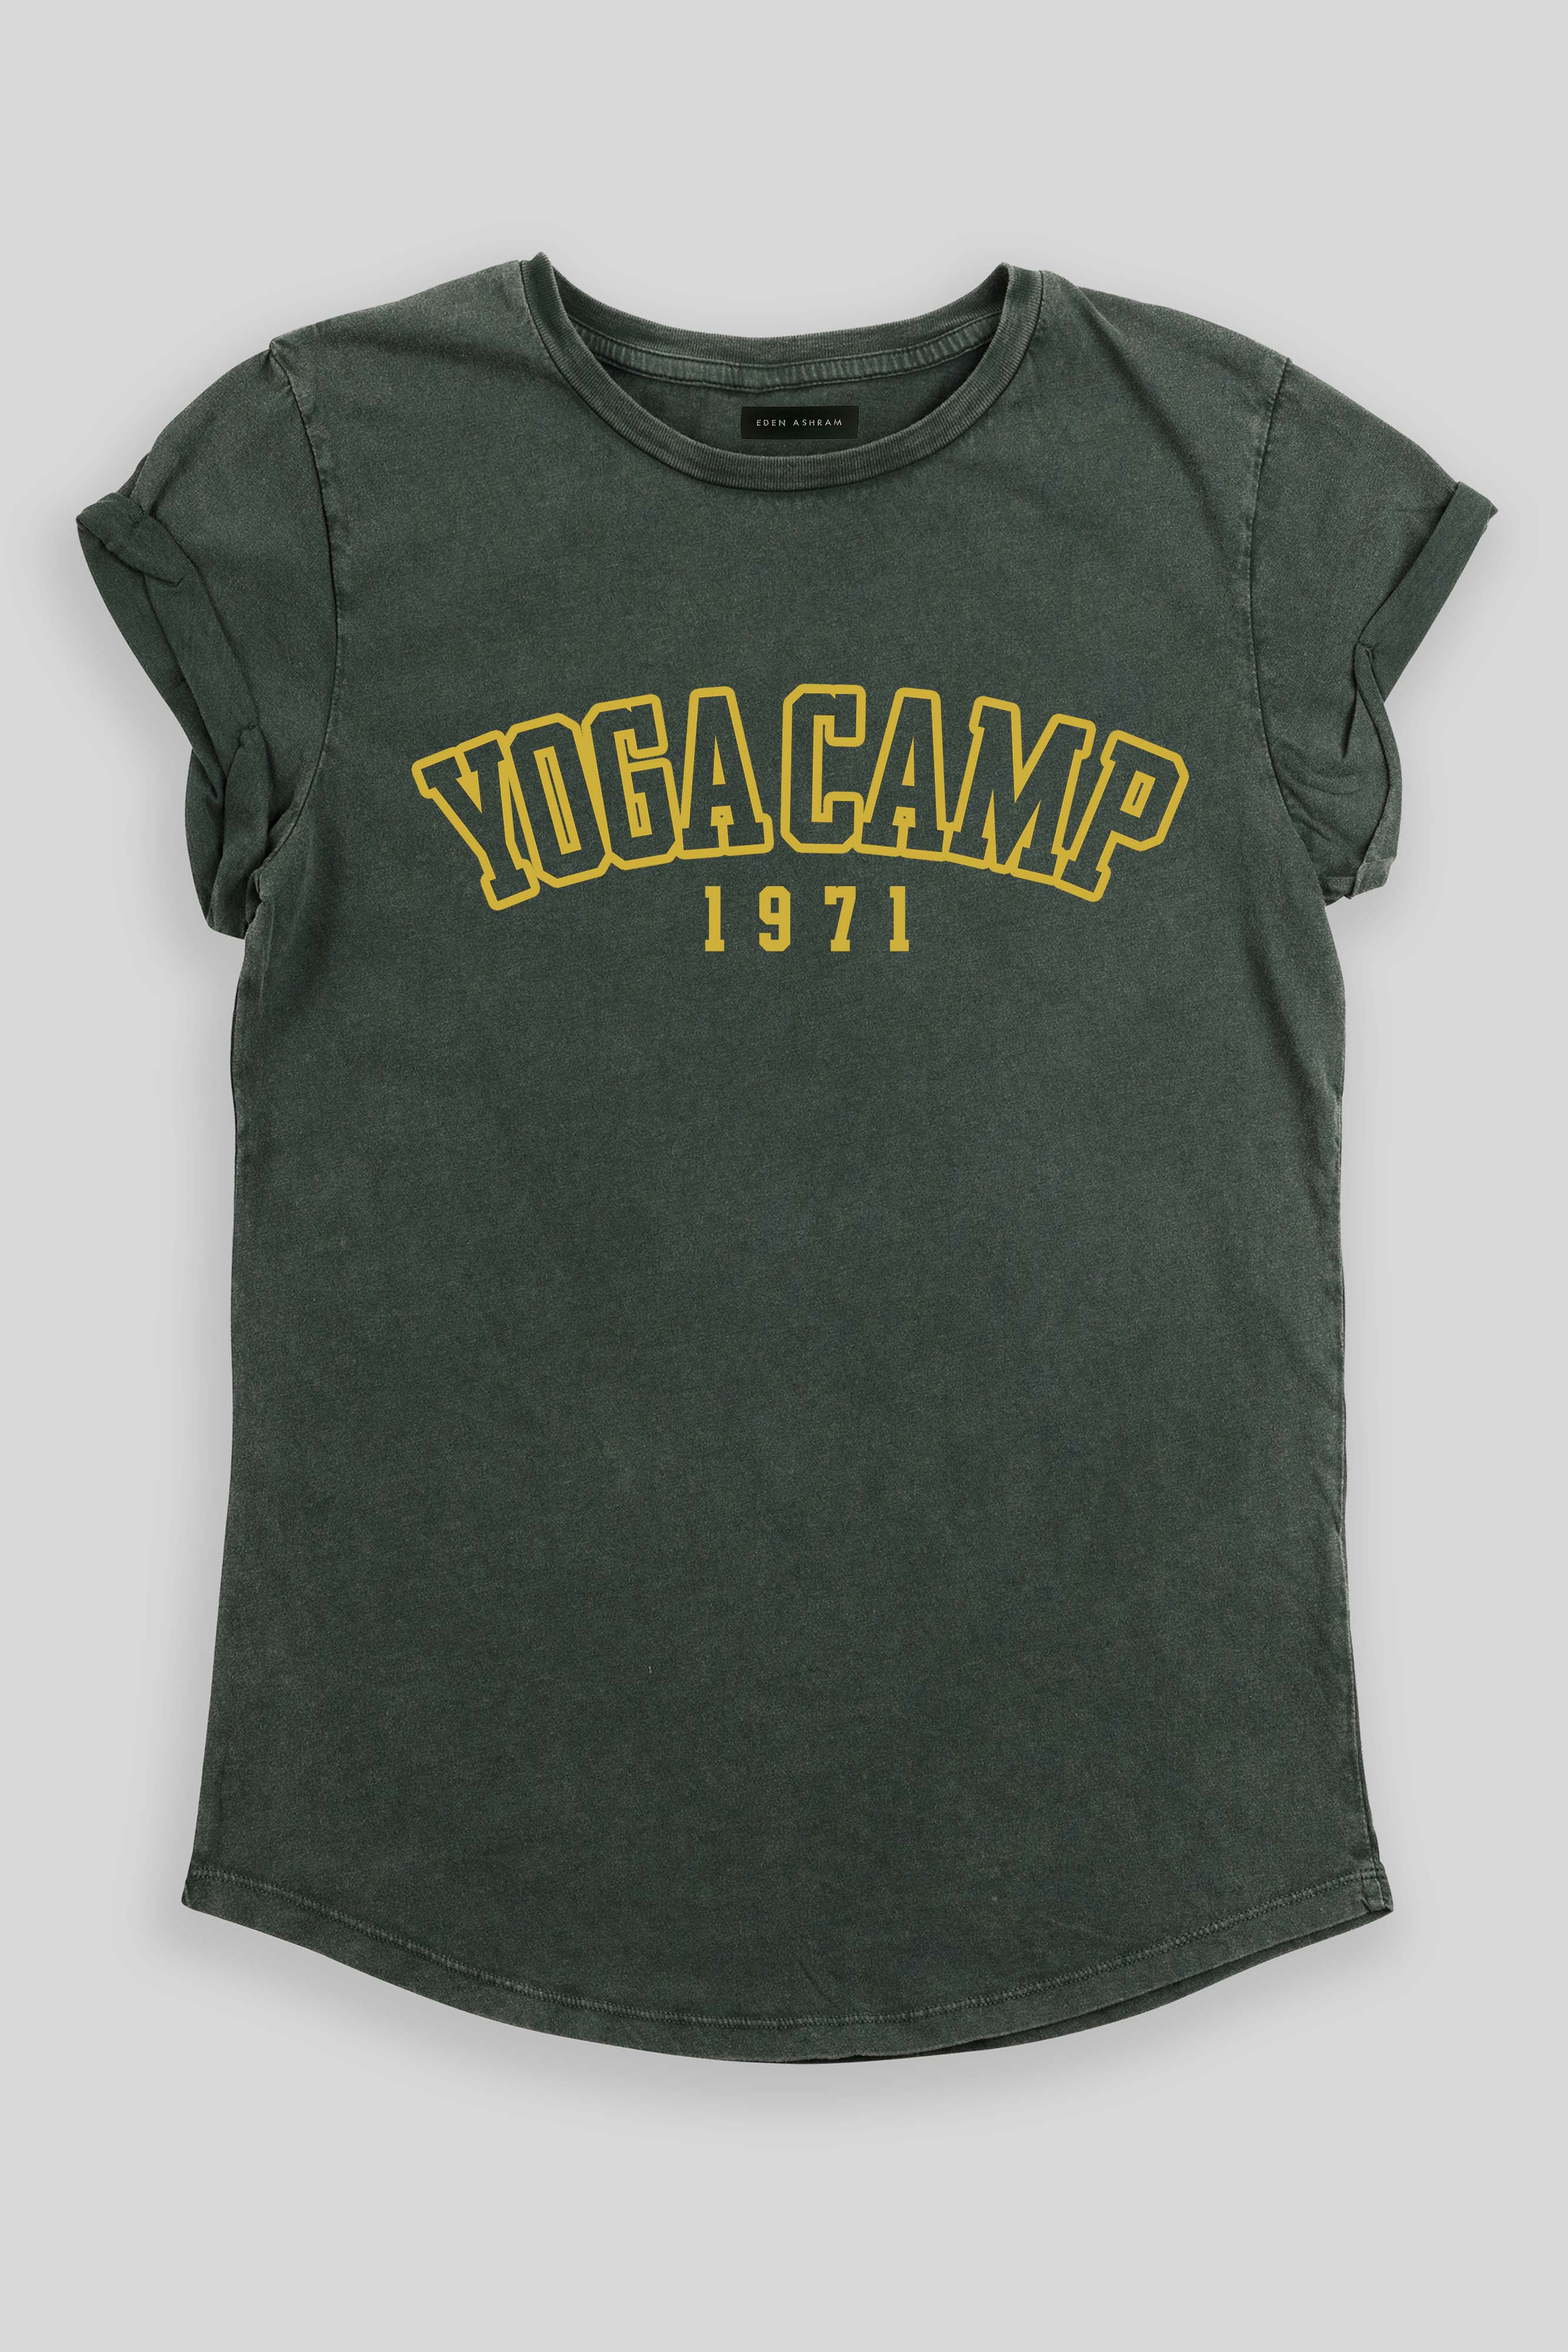 EDEN ASHRAM Yoga Camp 1971 Rolled Sleeve T-Shirt Stonewash Green